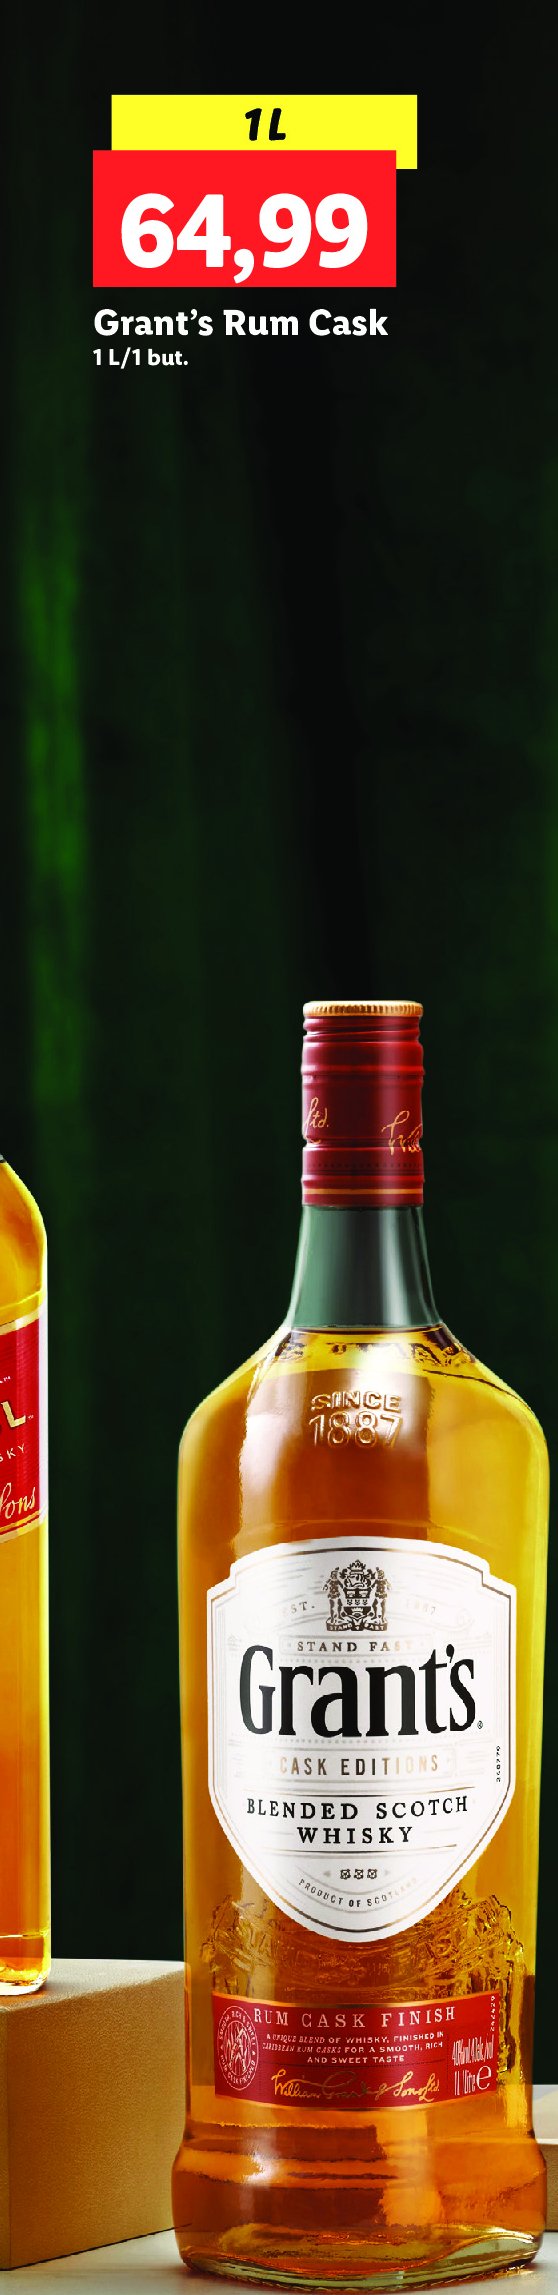 Whisky Grant's rum cask promocja